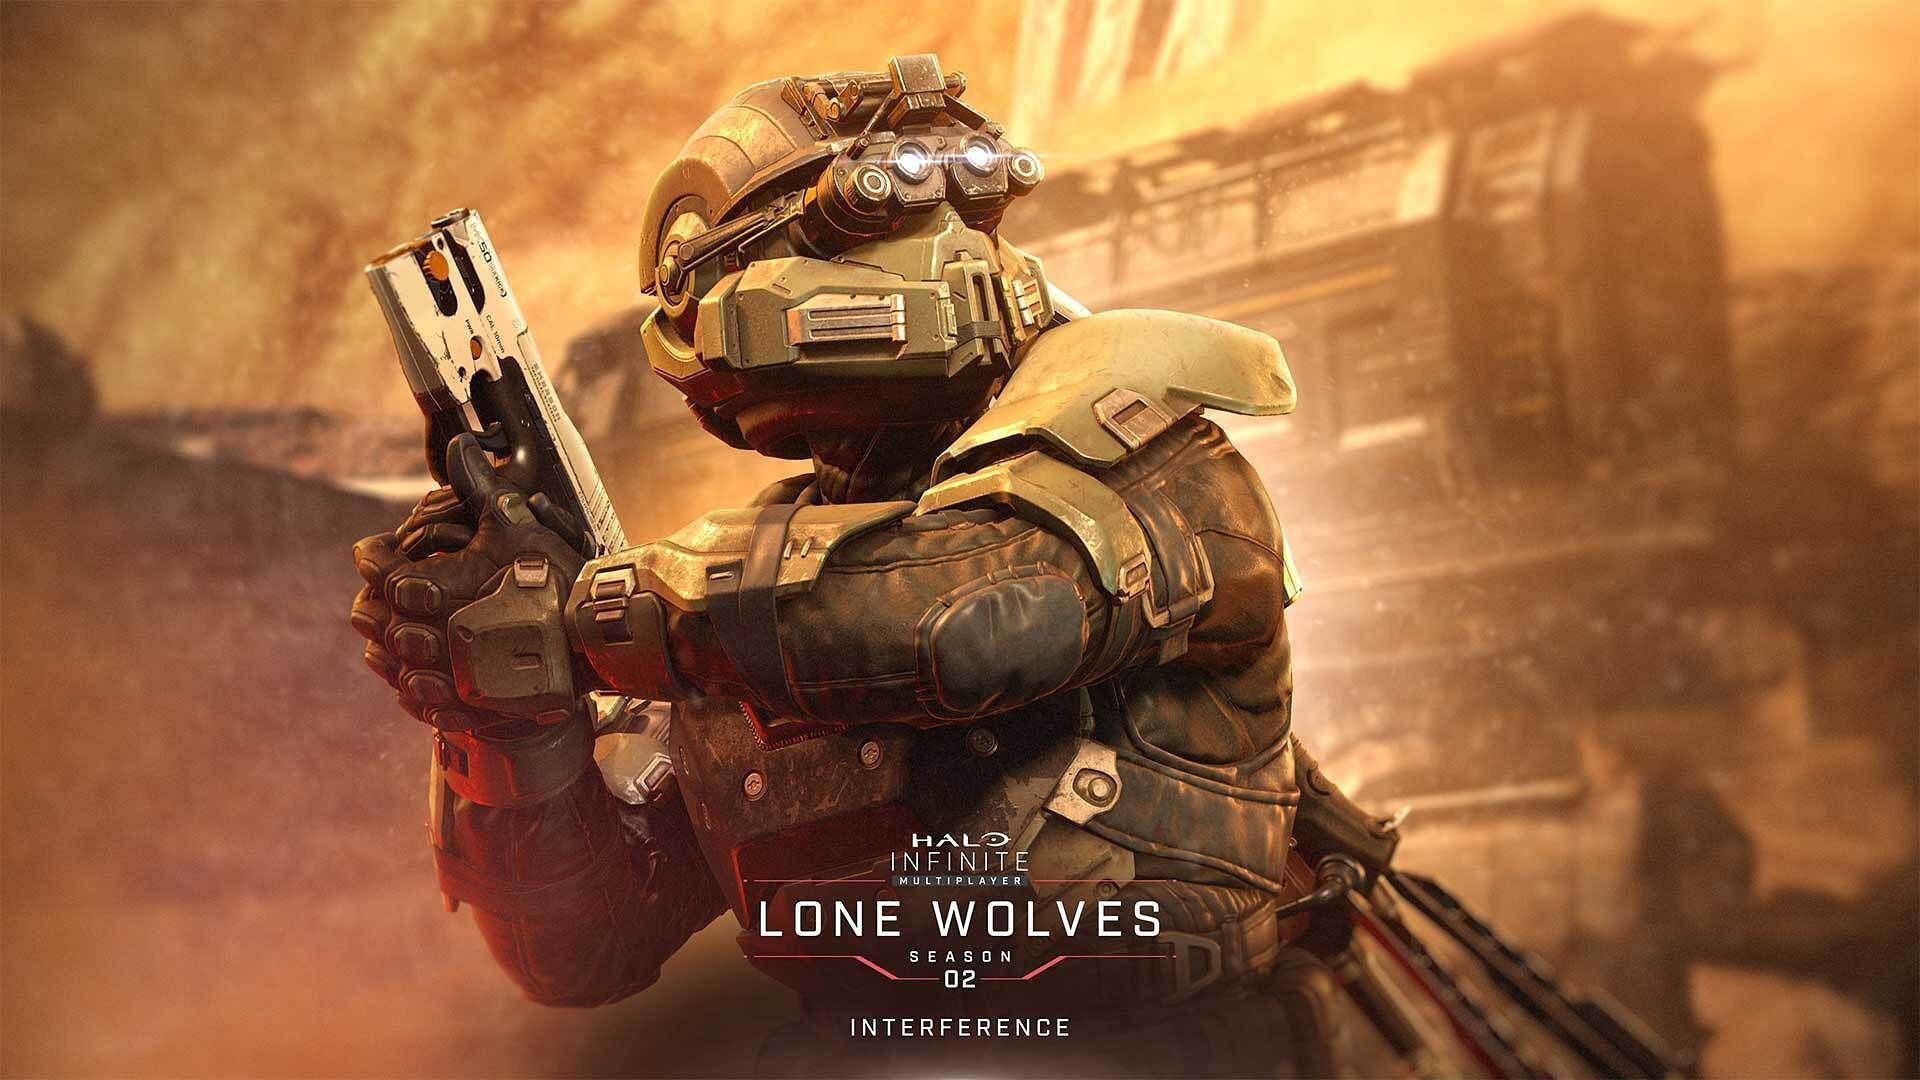 Halo Infinite Season 2 release date – Lone Wolves kicks off May